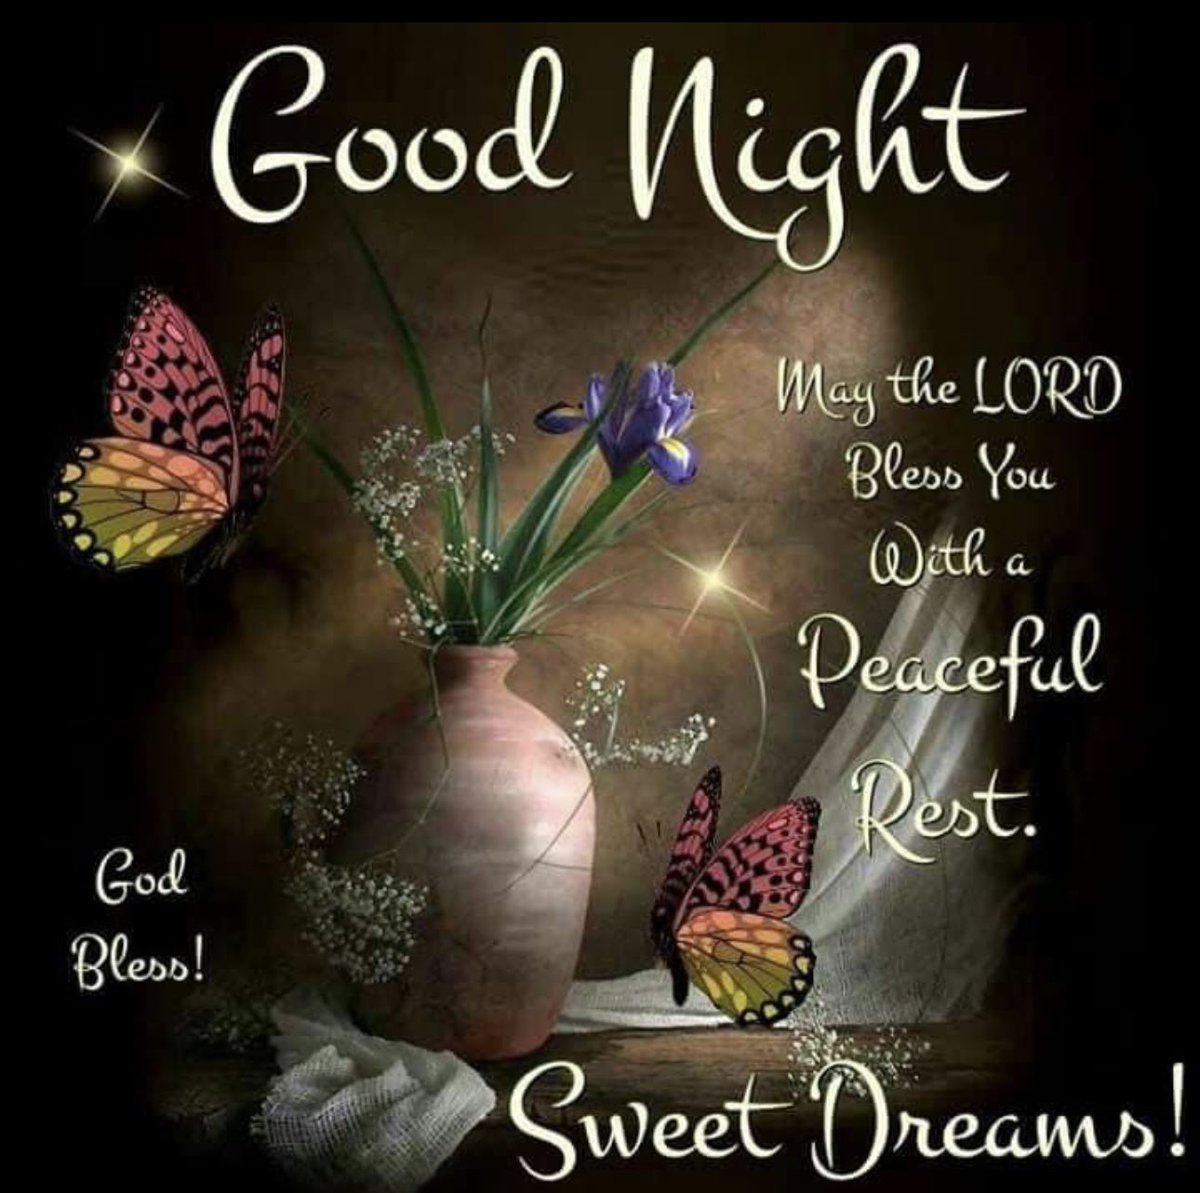 Goodnight 😴 Everyone, Sleep tight, See Y’all tomorrow 💪👧💜